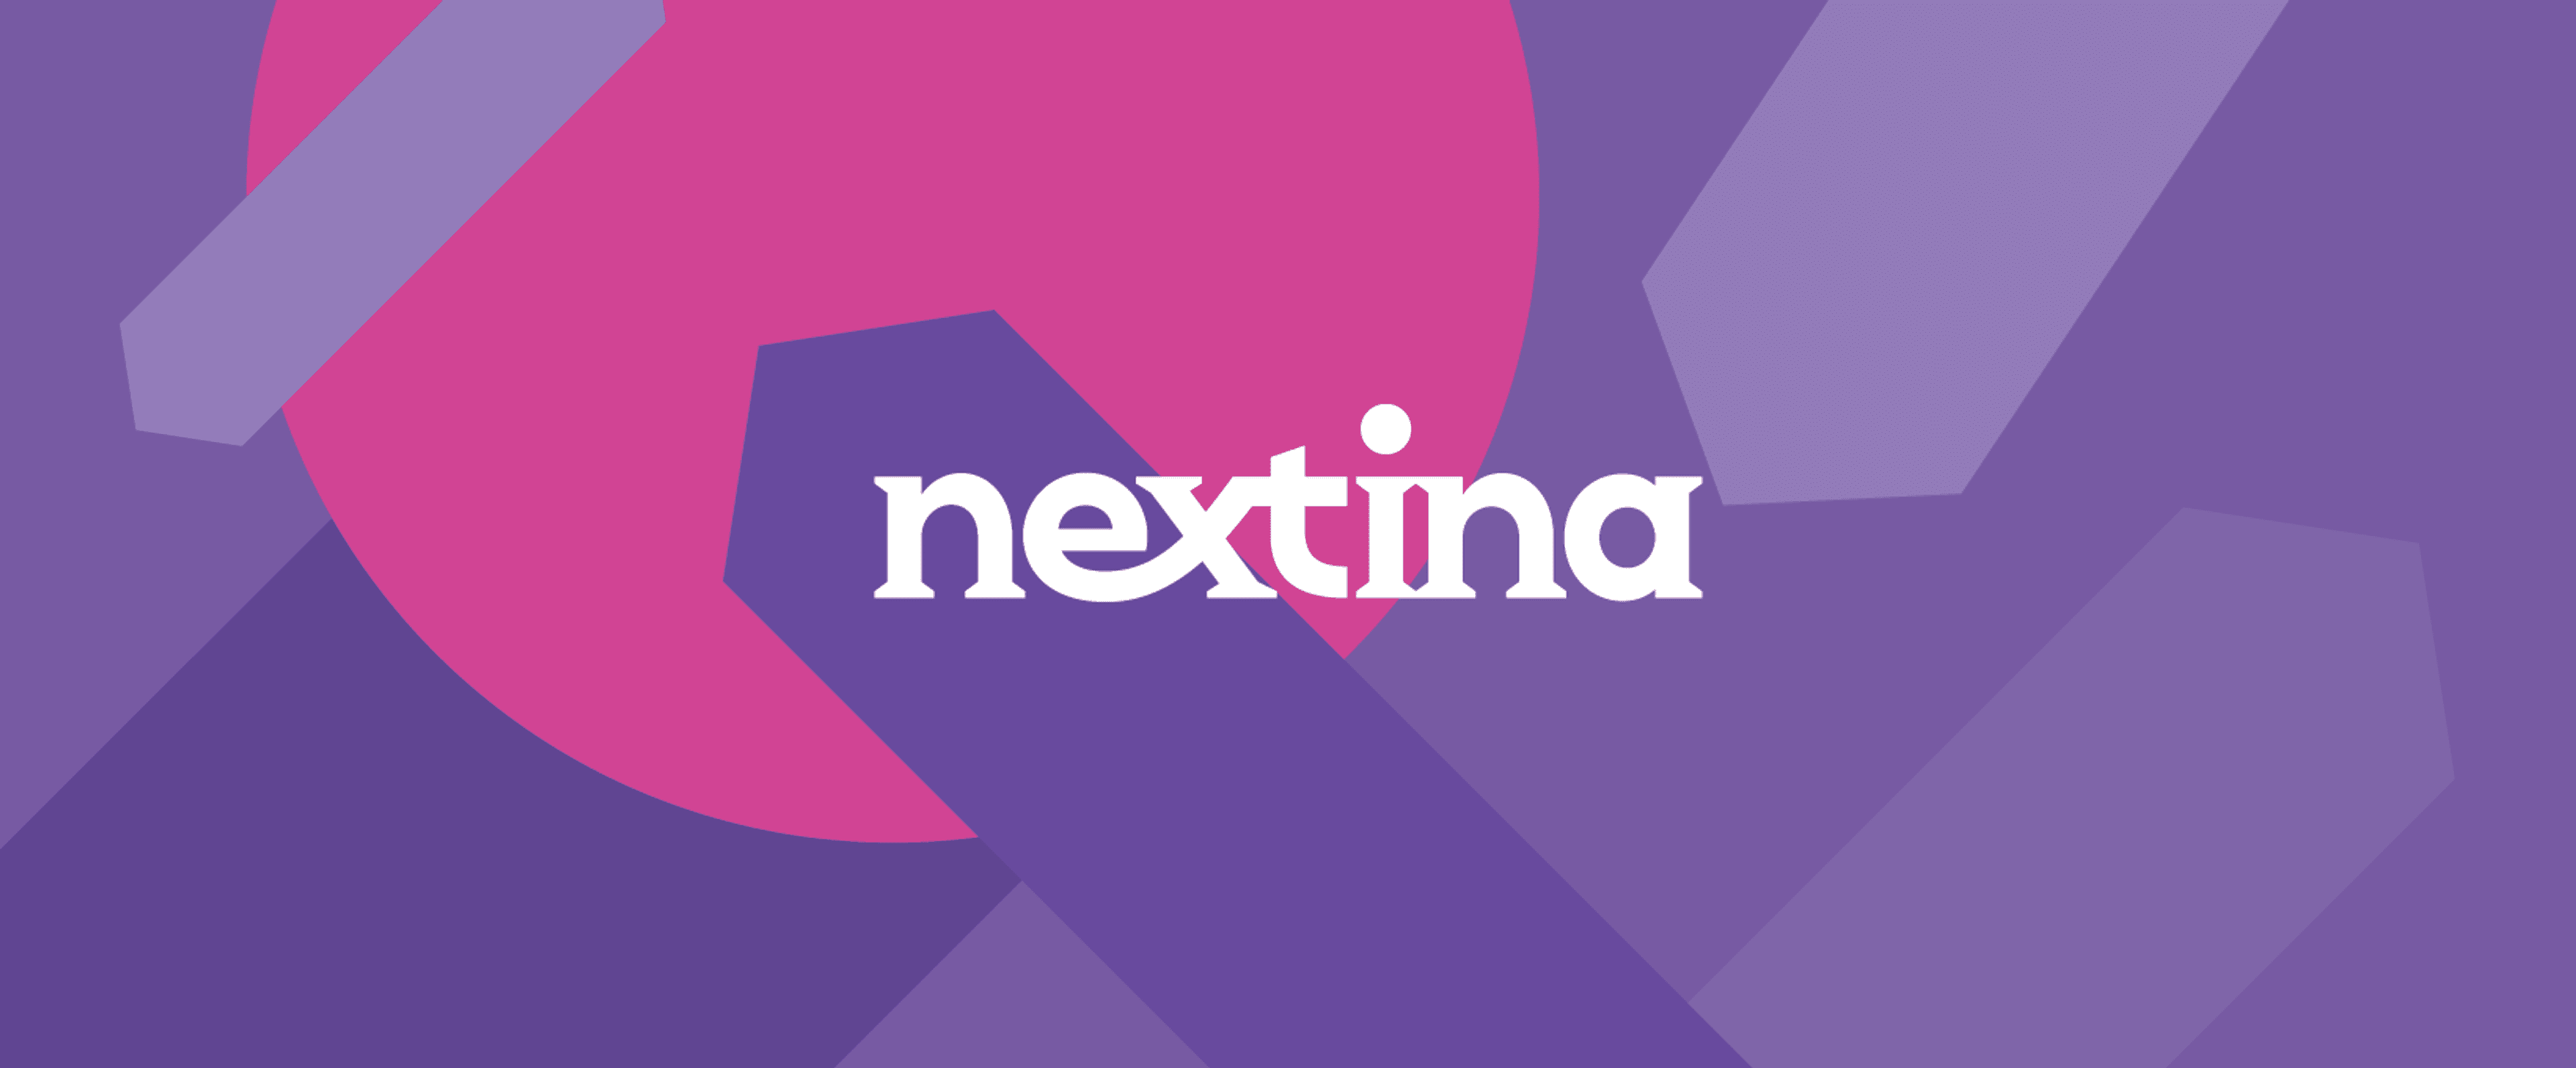 Nextina, Slovak public relations firm